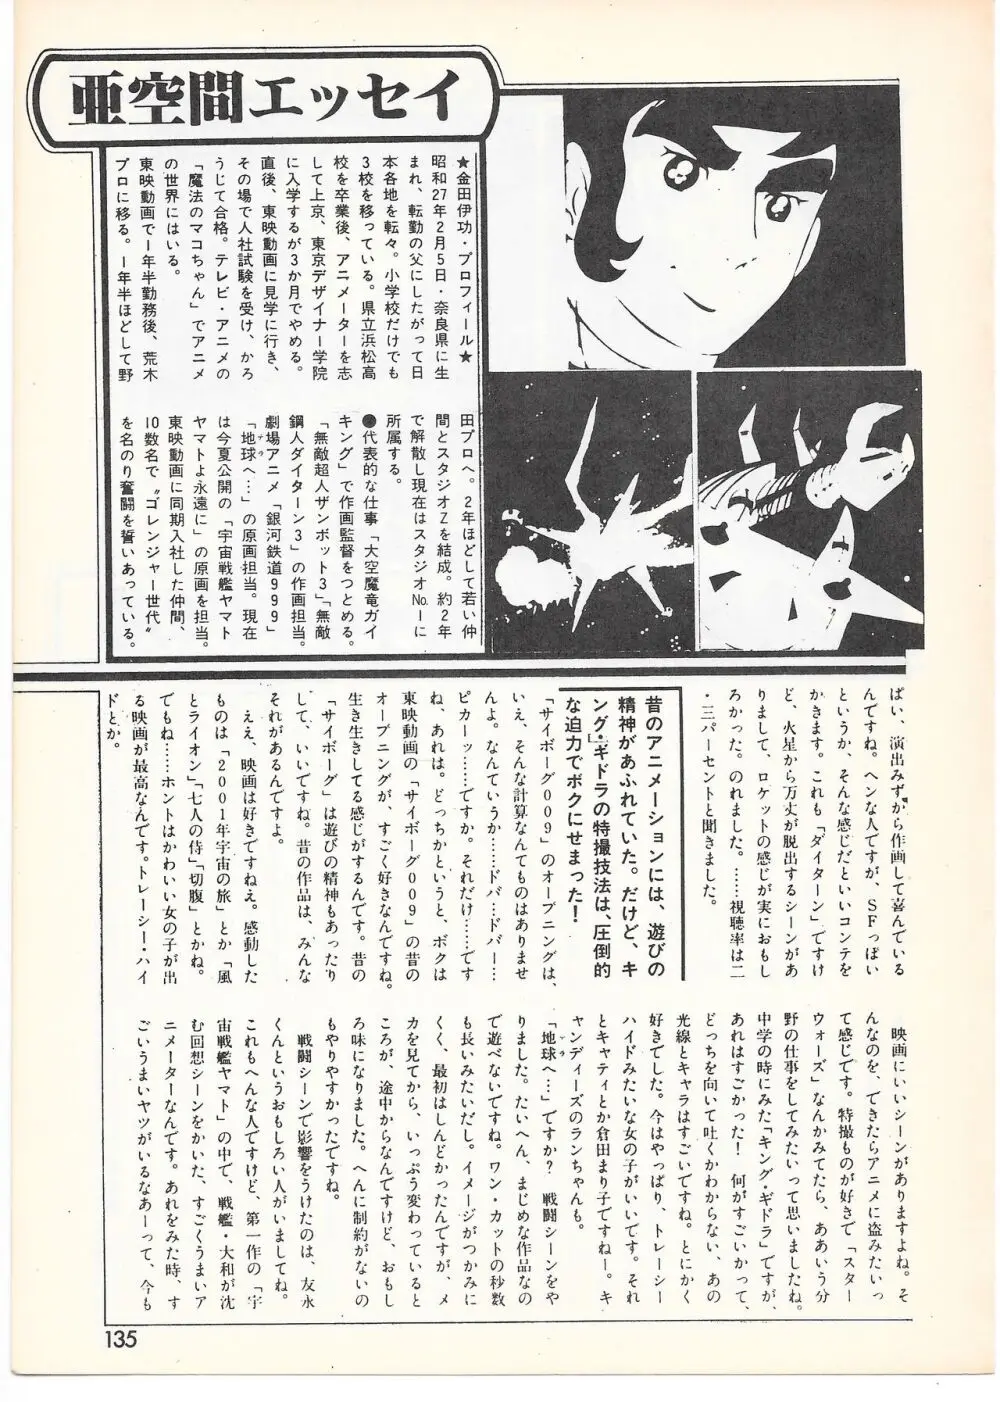 THE ANIMATOR 1 金田伊功特集号 - page130